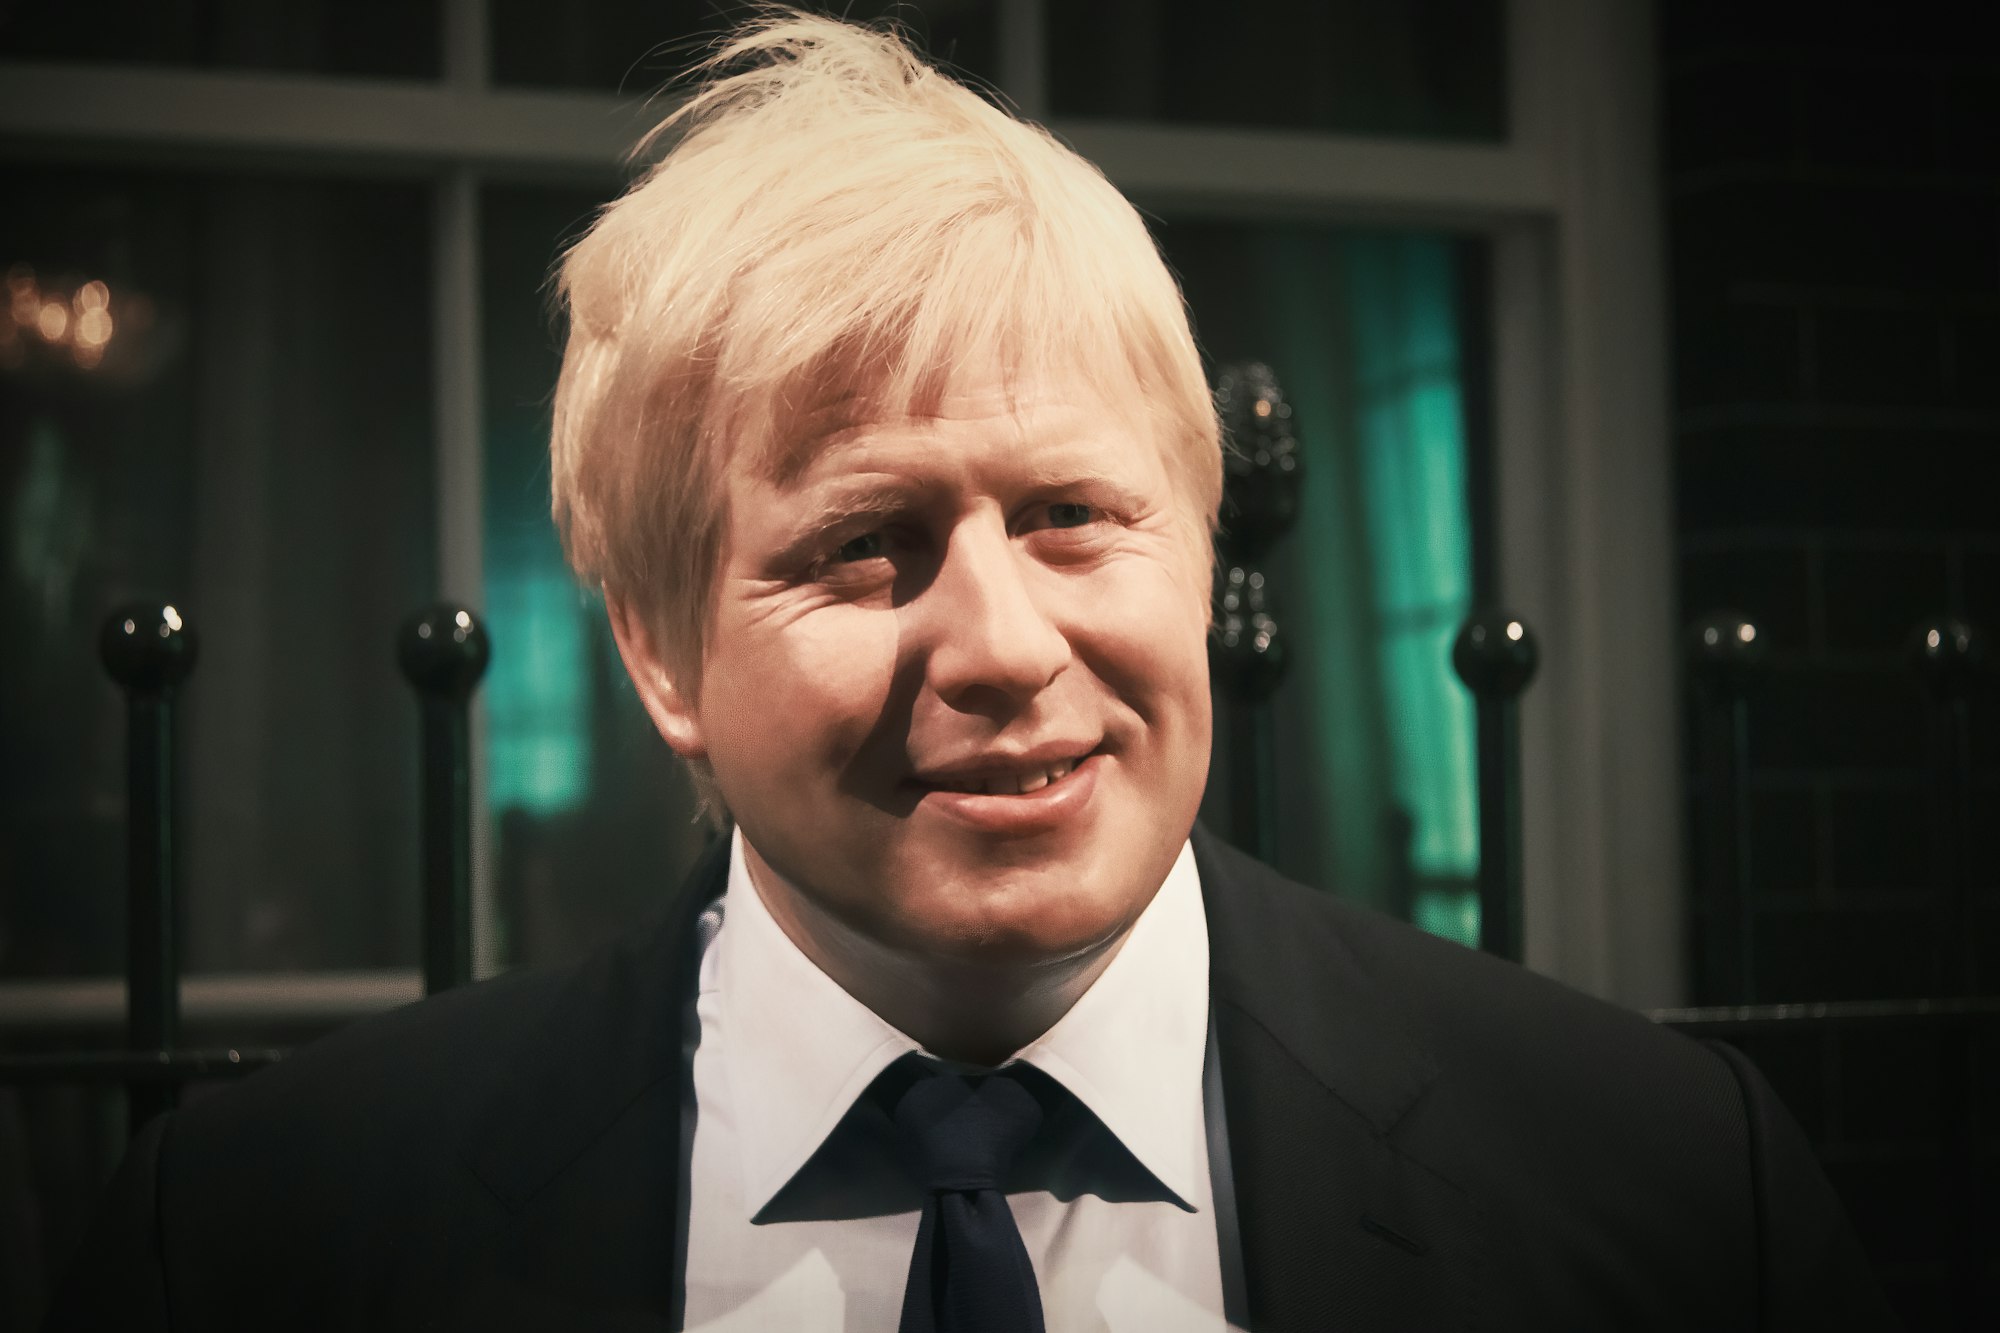 Waxwork of Boris Johnson on display at Madame Tussauds, Marylebone, London, England.